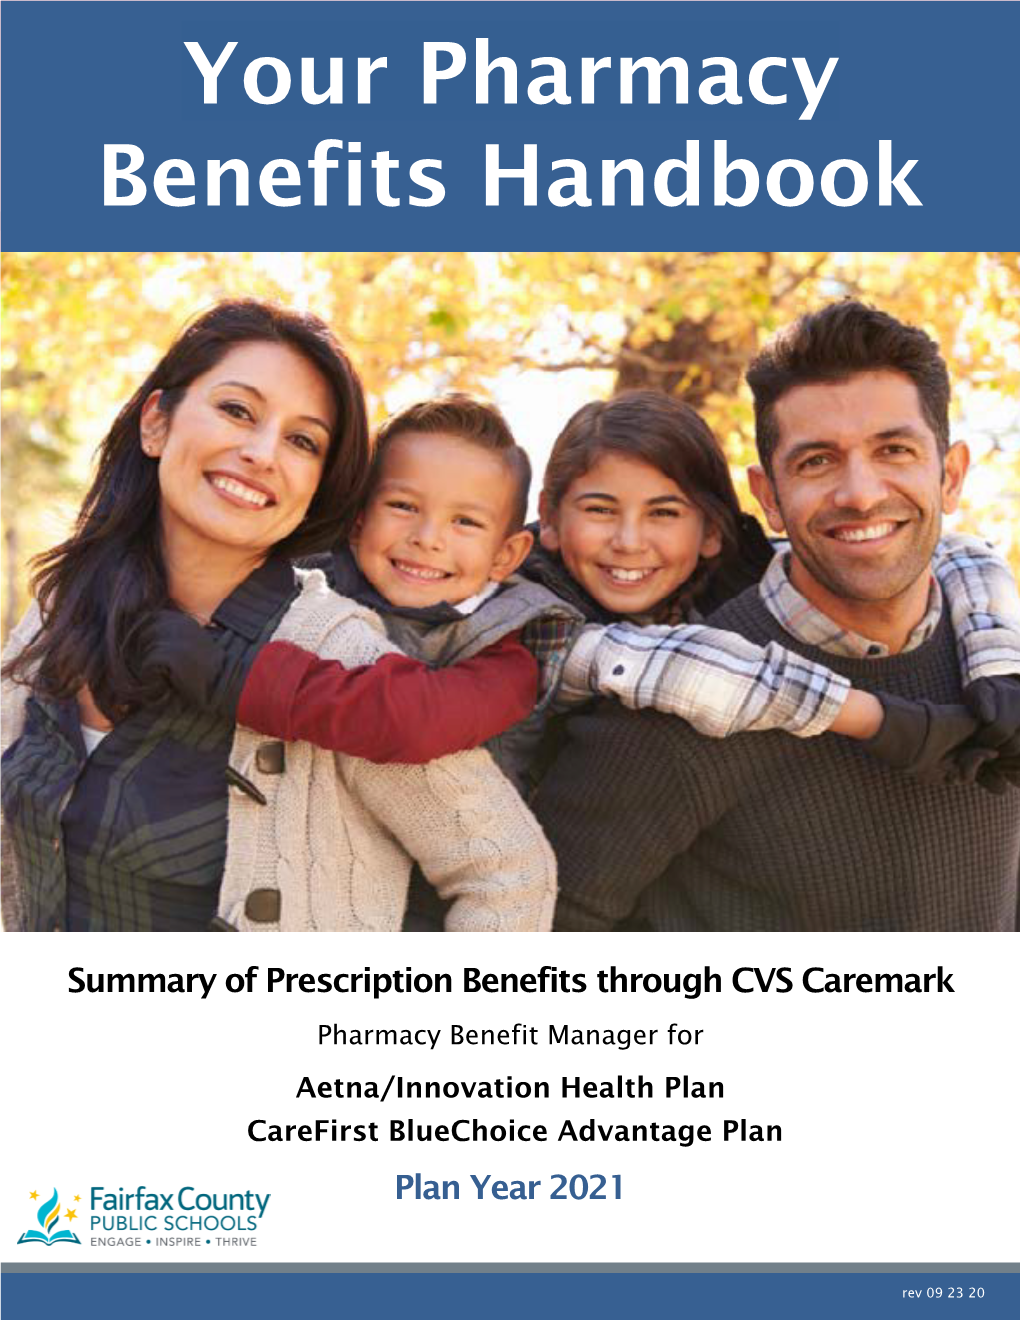 Your Pharmacy Benefits Handbook